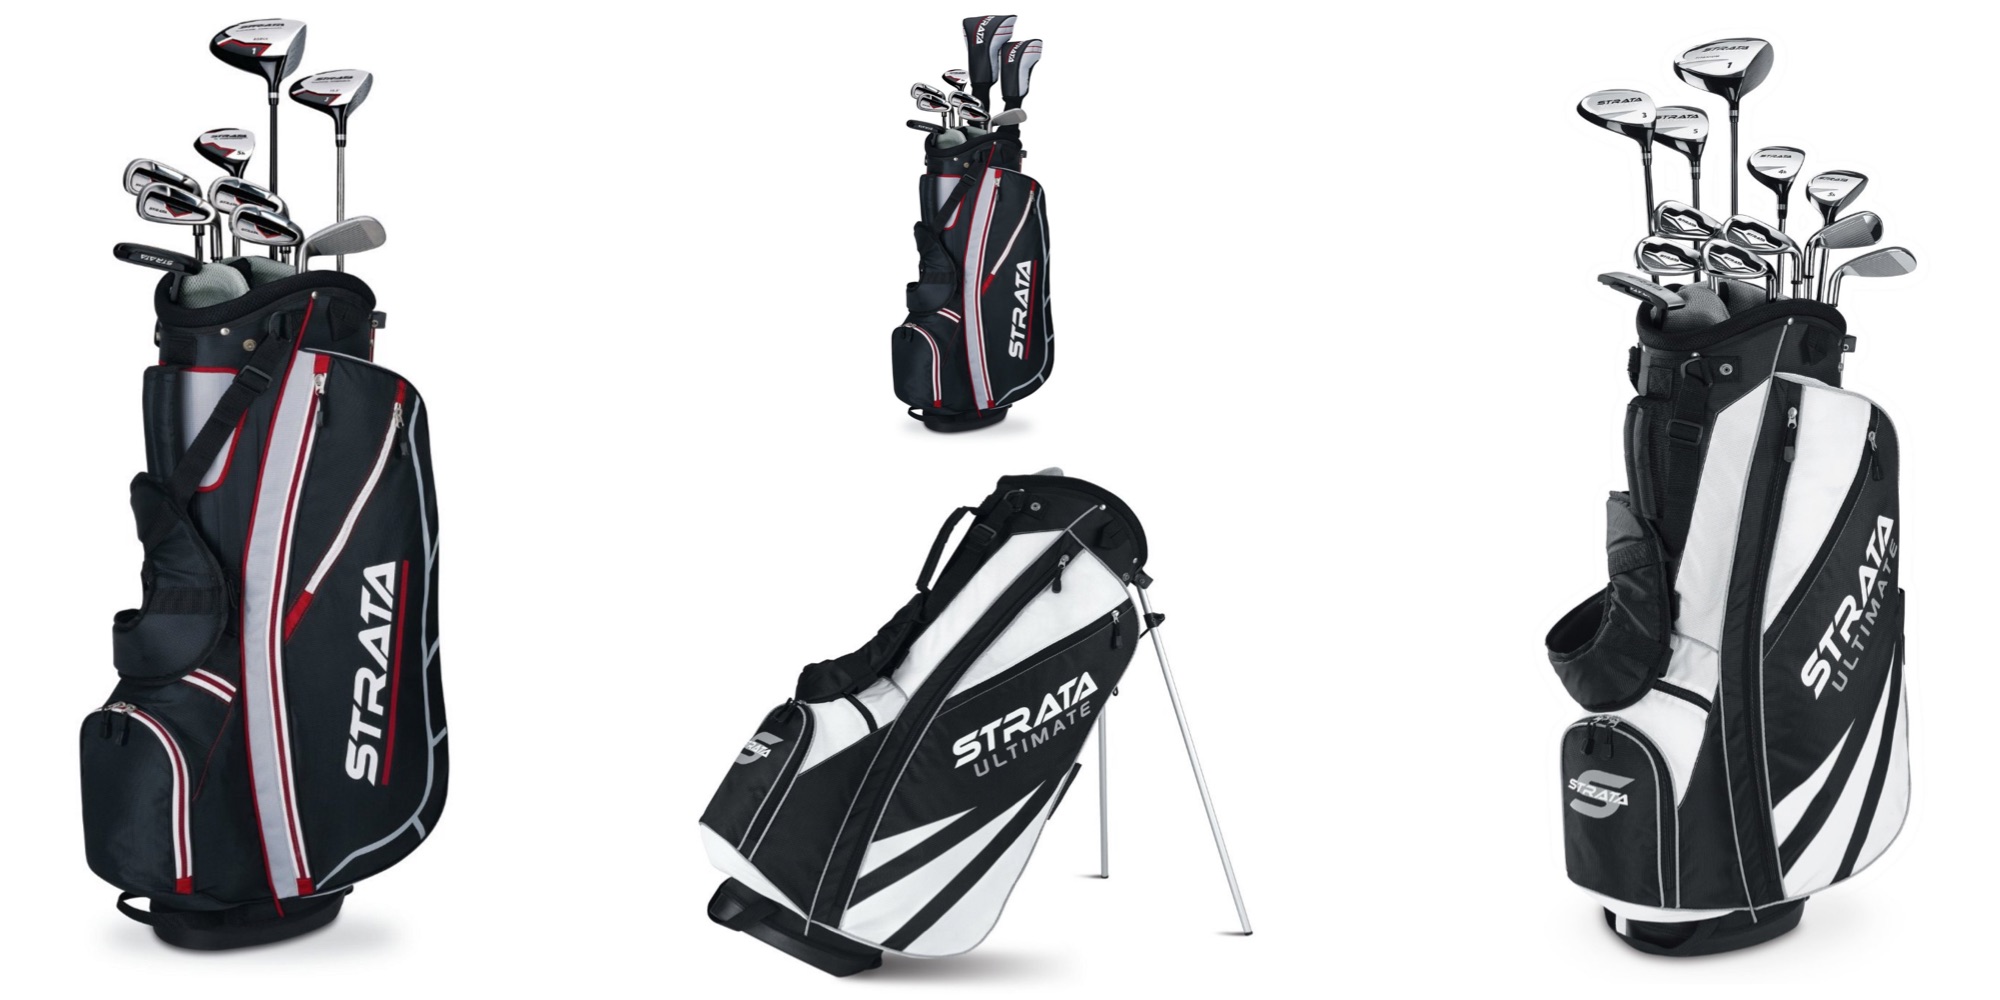 Stop borrowing golf clubs! Callaway Strata 12-piece including bag